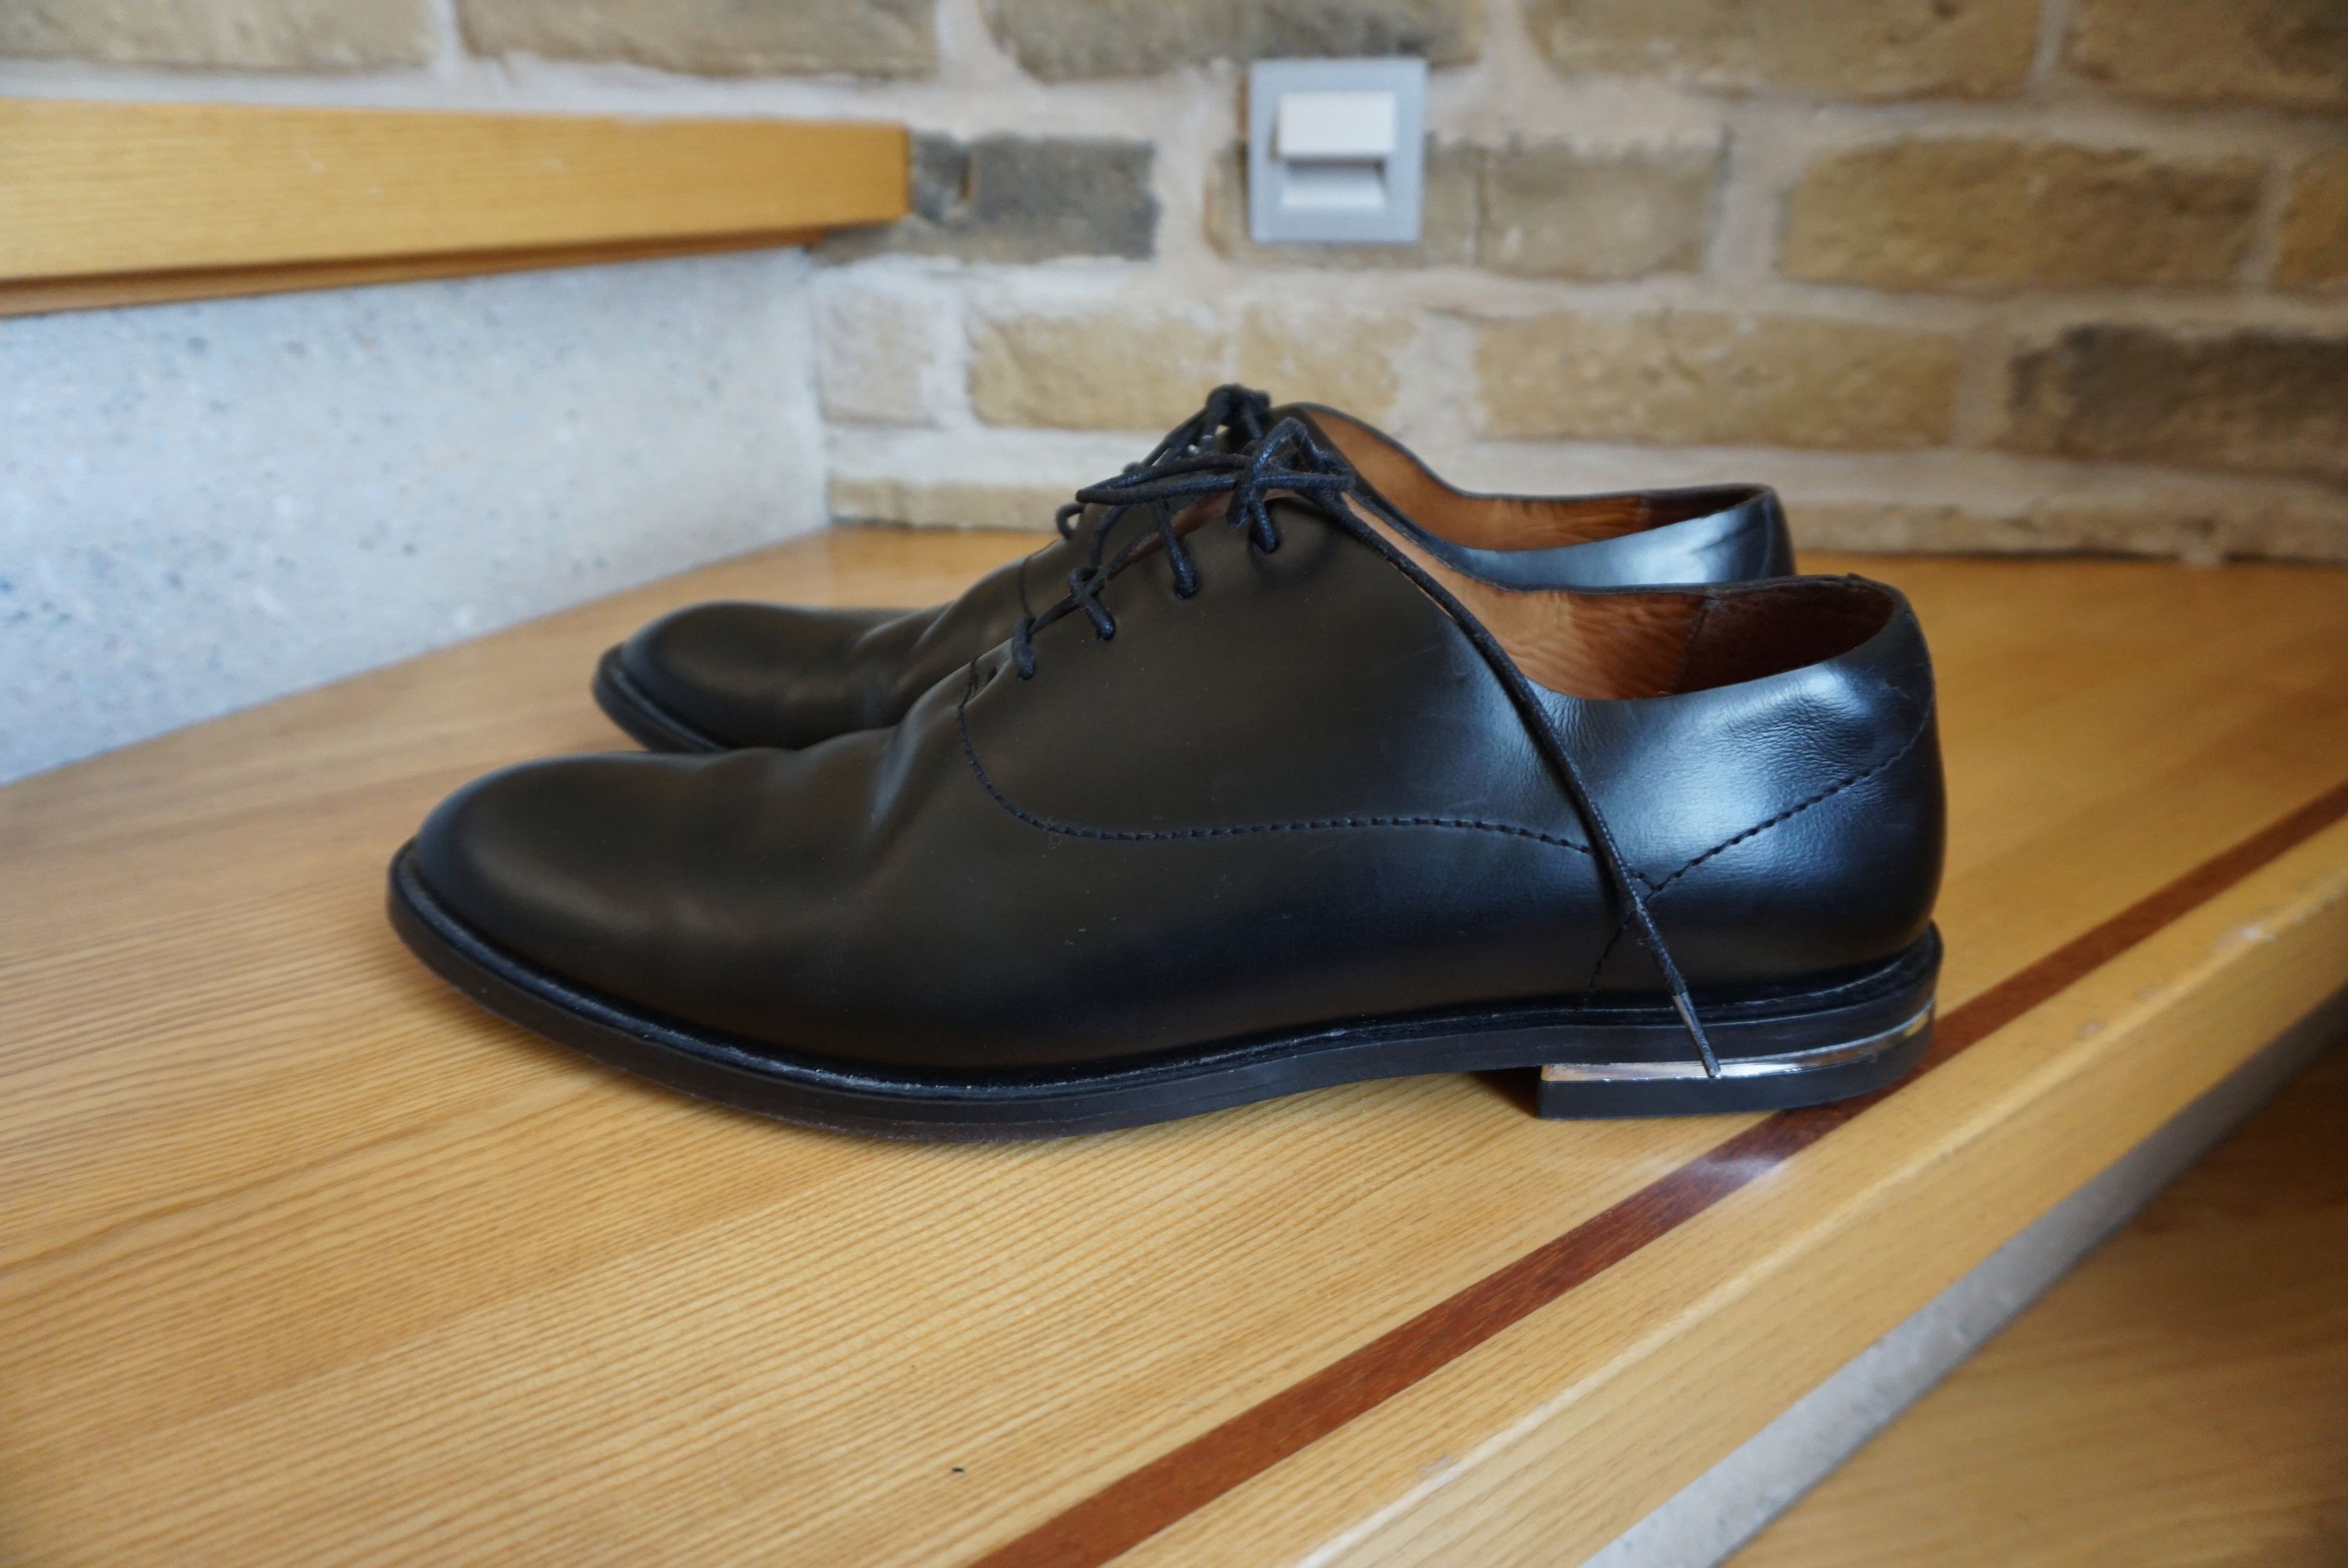 Cos COS RPR$250 leather office shoes EU44 black formal lace up Size US 10.5 / EU 43-44 - 5 Thumbnail